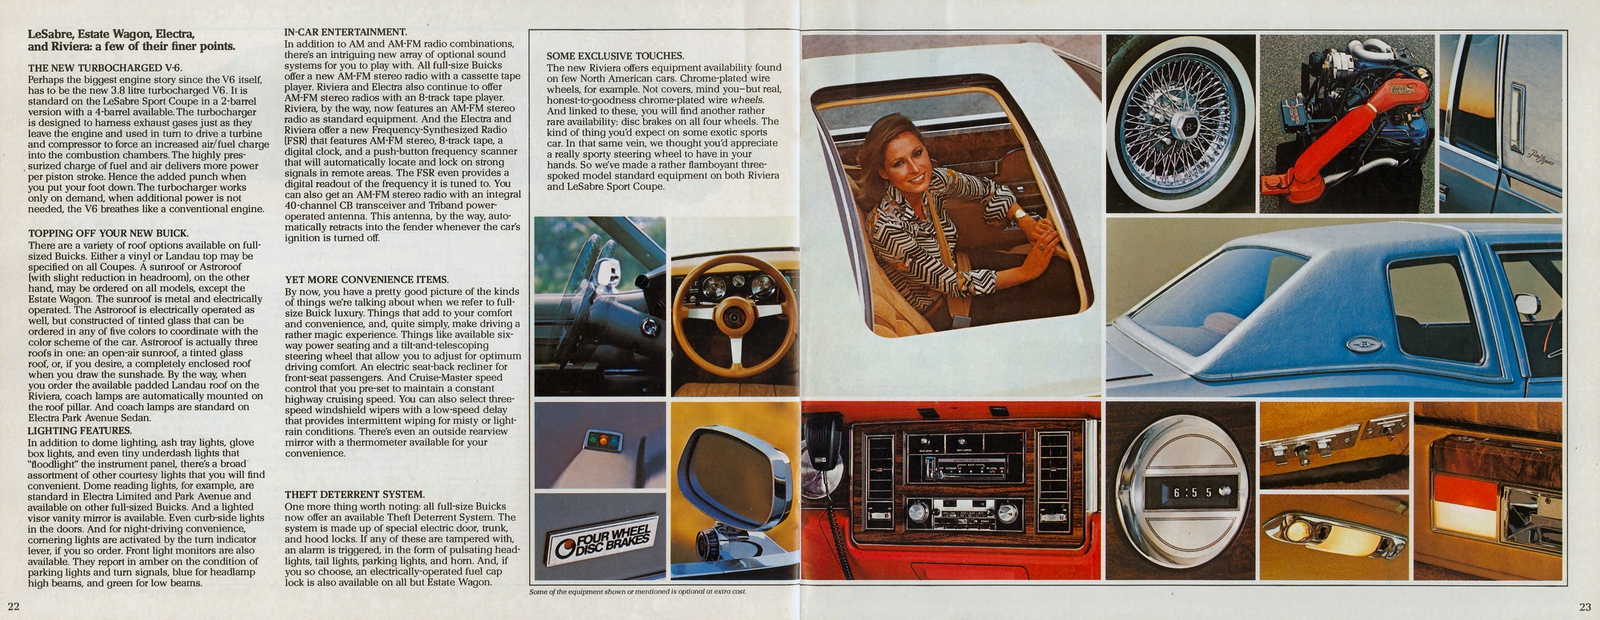 n_1978 Buick Full Size (Cdn)-22-23.jpg